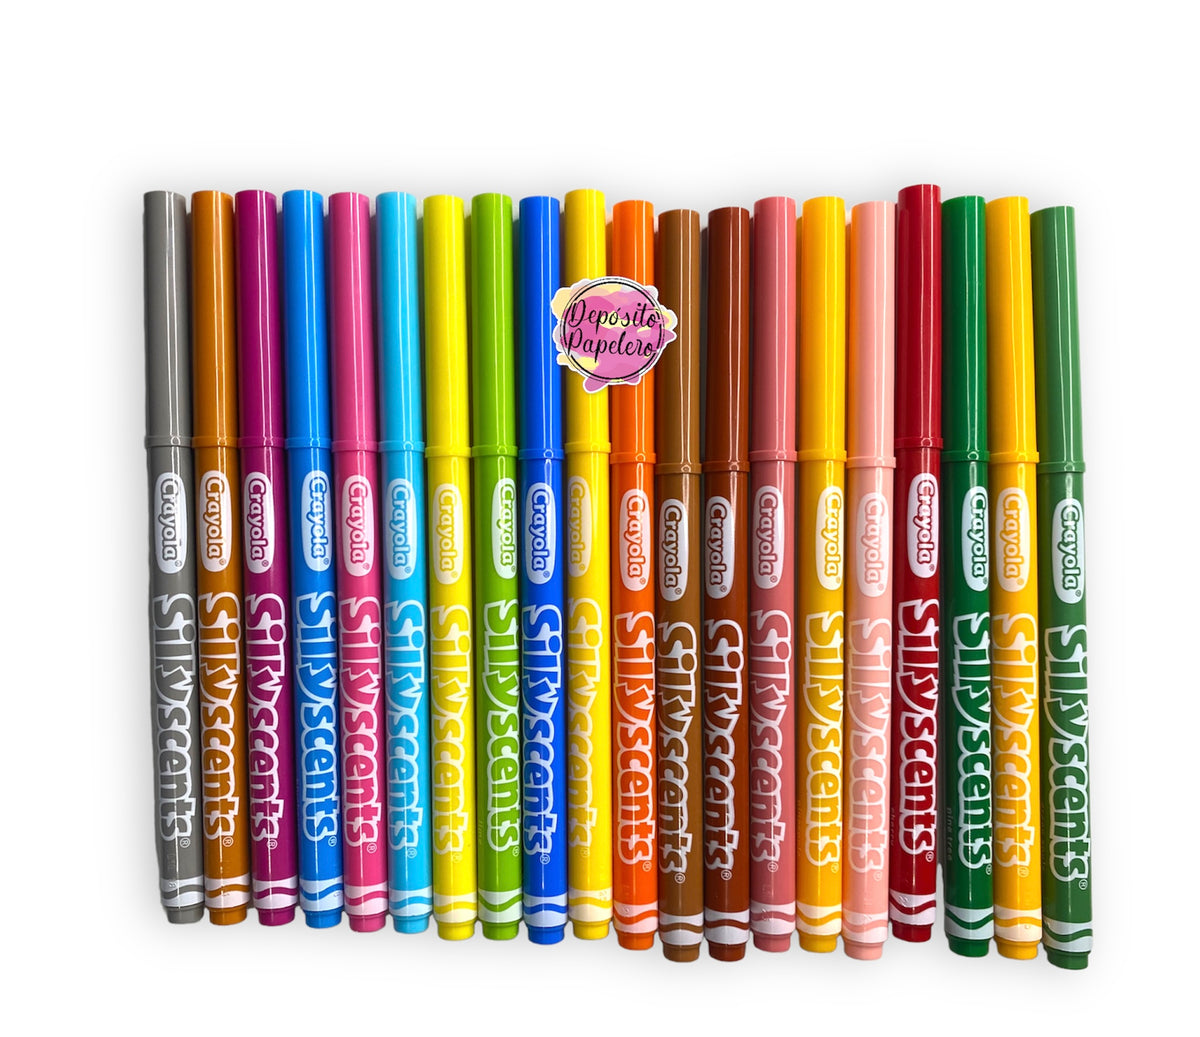 Crayola Supertips 100 20 Silly Scentes Deposito Papelero